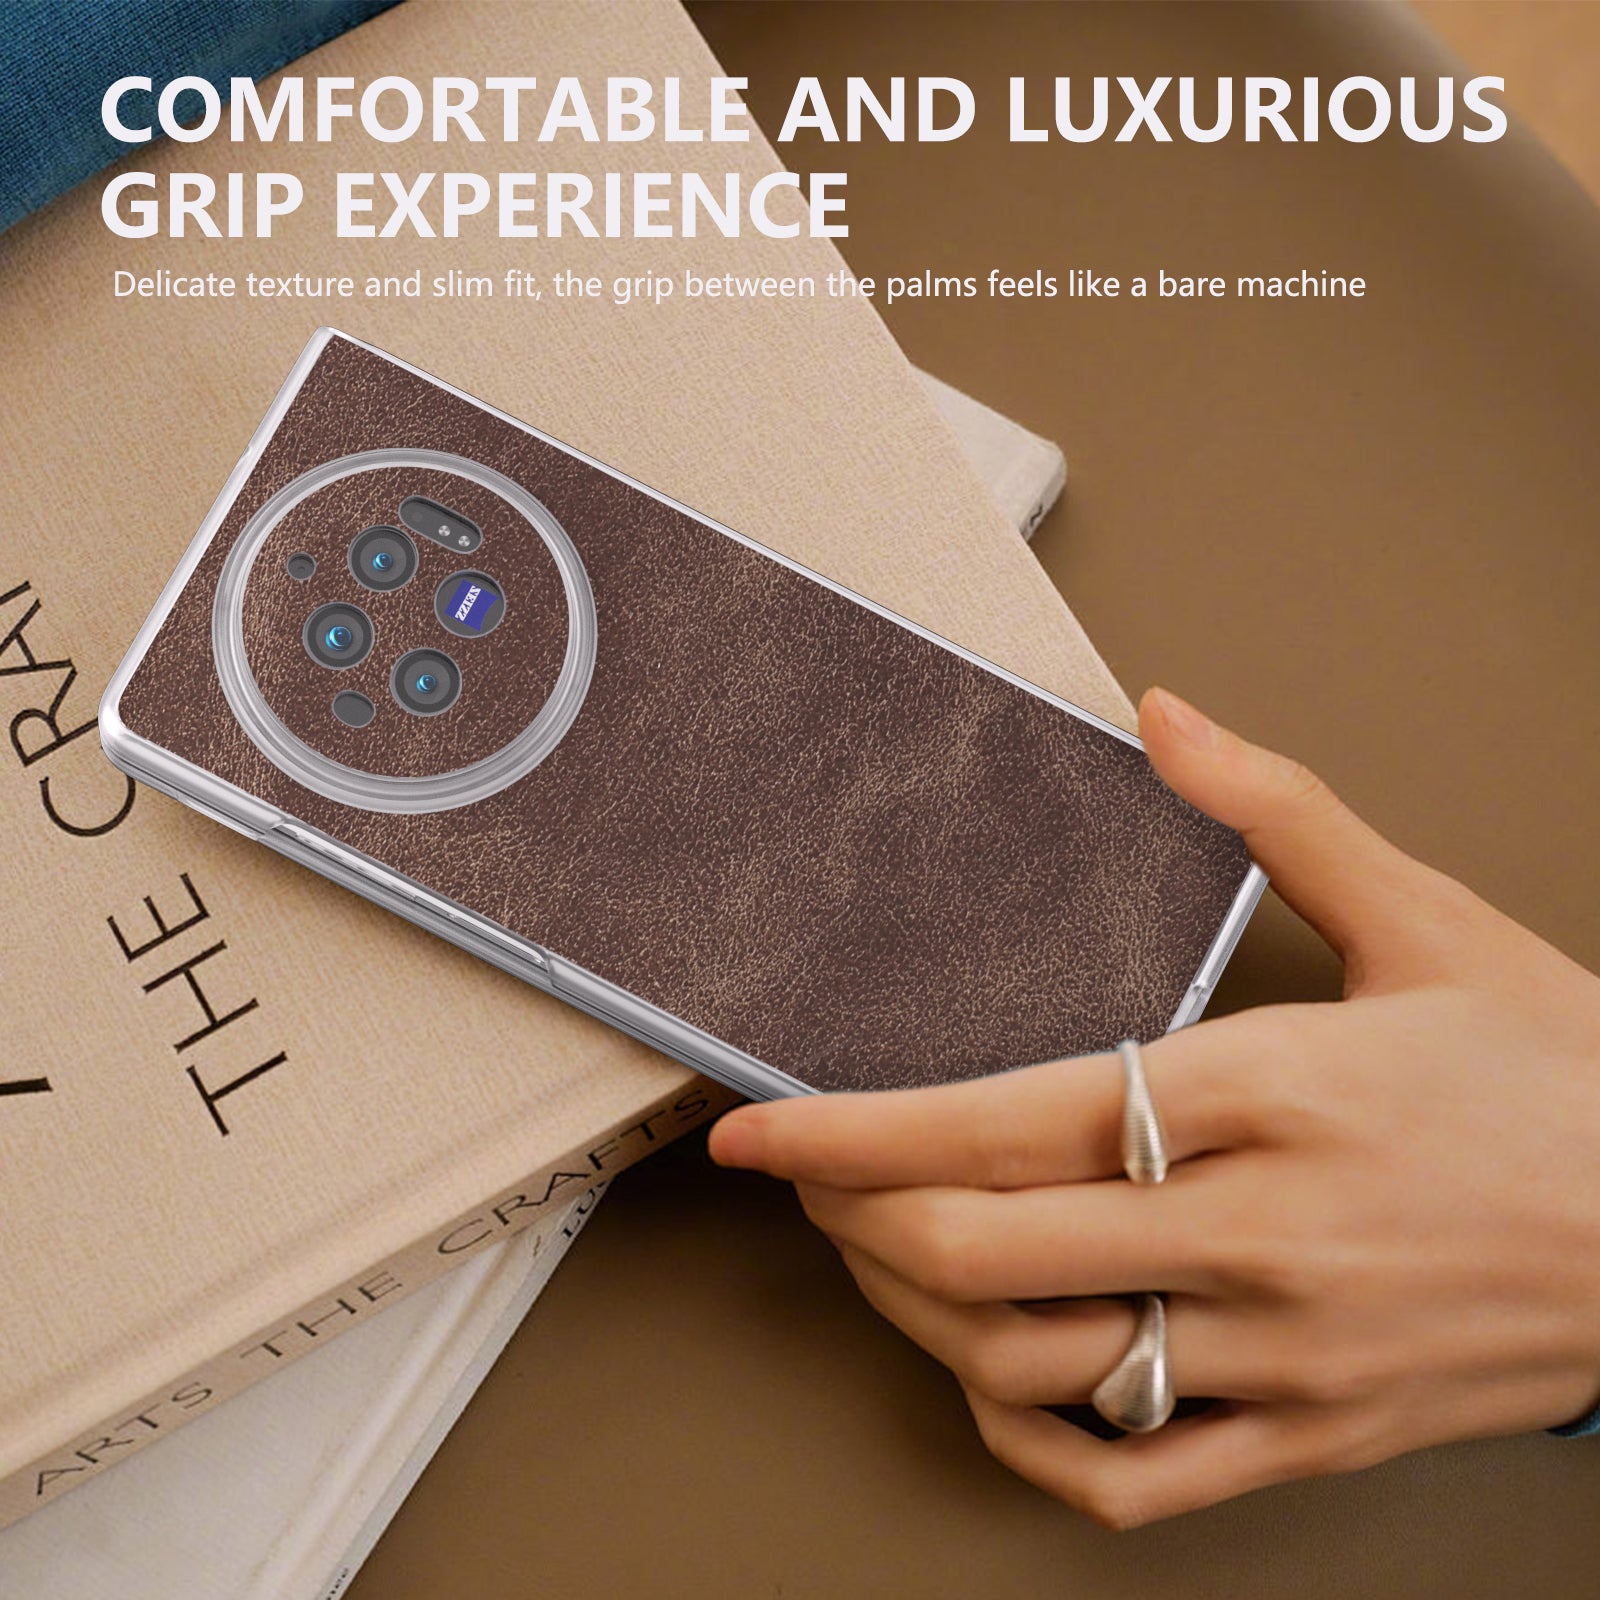 For vivo X Fold3 Case PU Leather Coated PC Matte Edge Anti-Fingerprint Phone Cover - Coffee